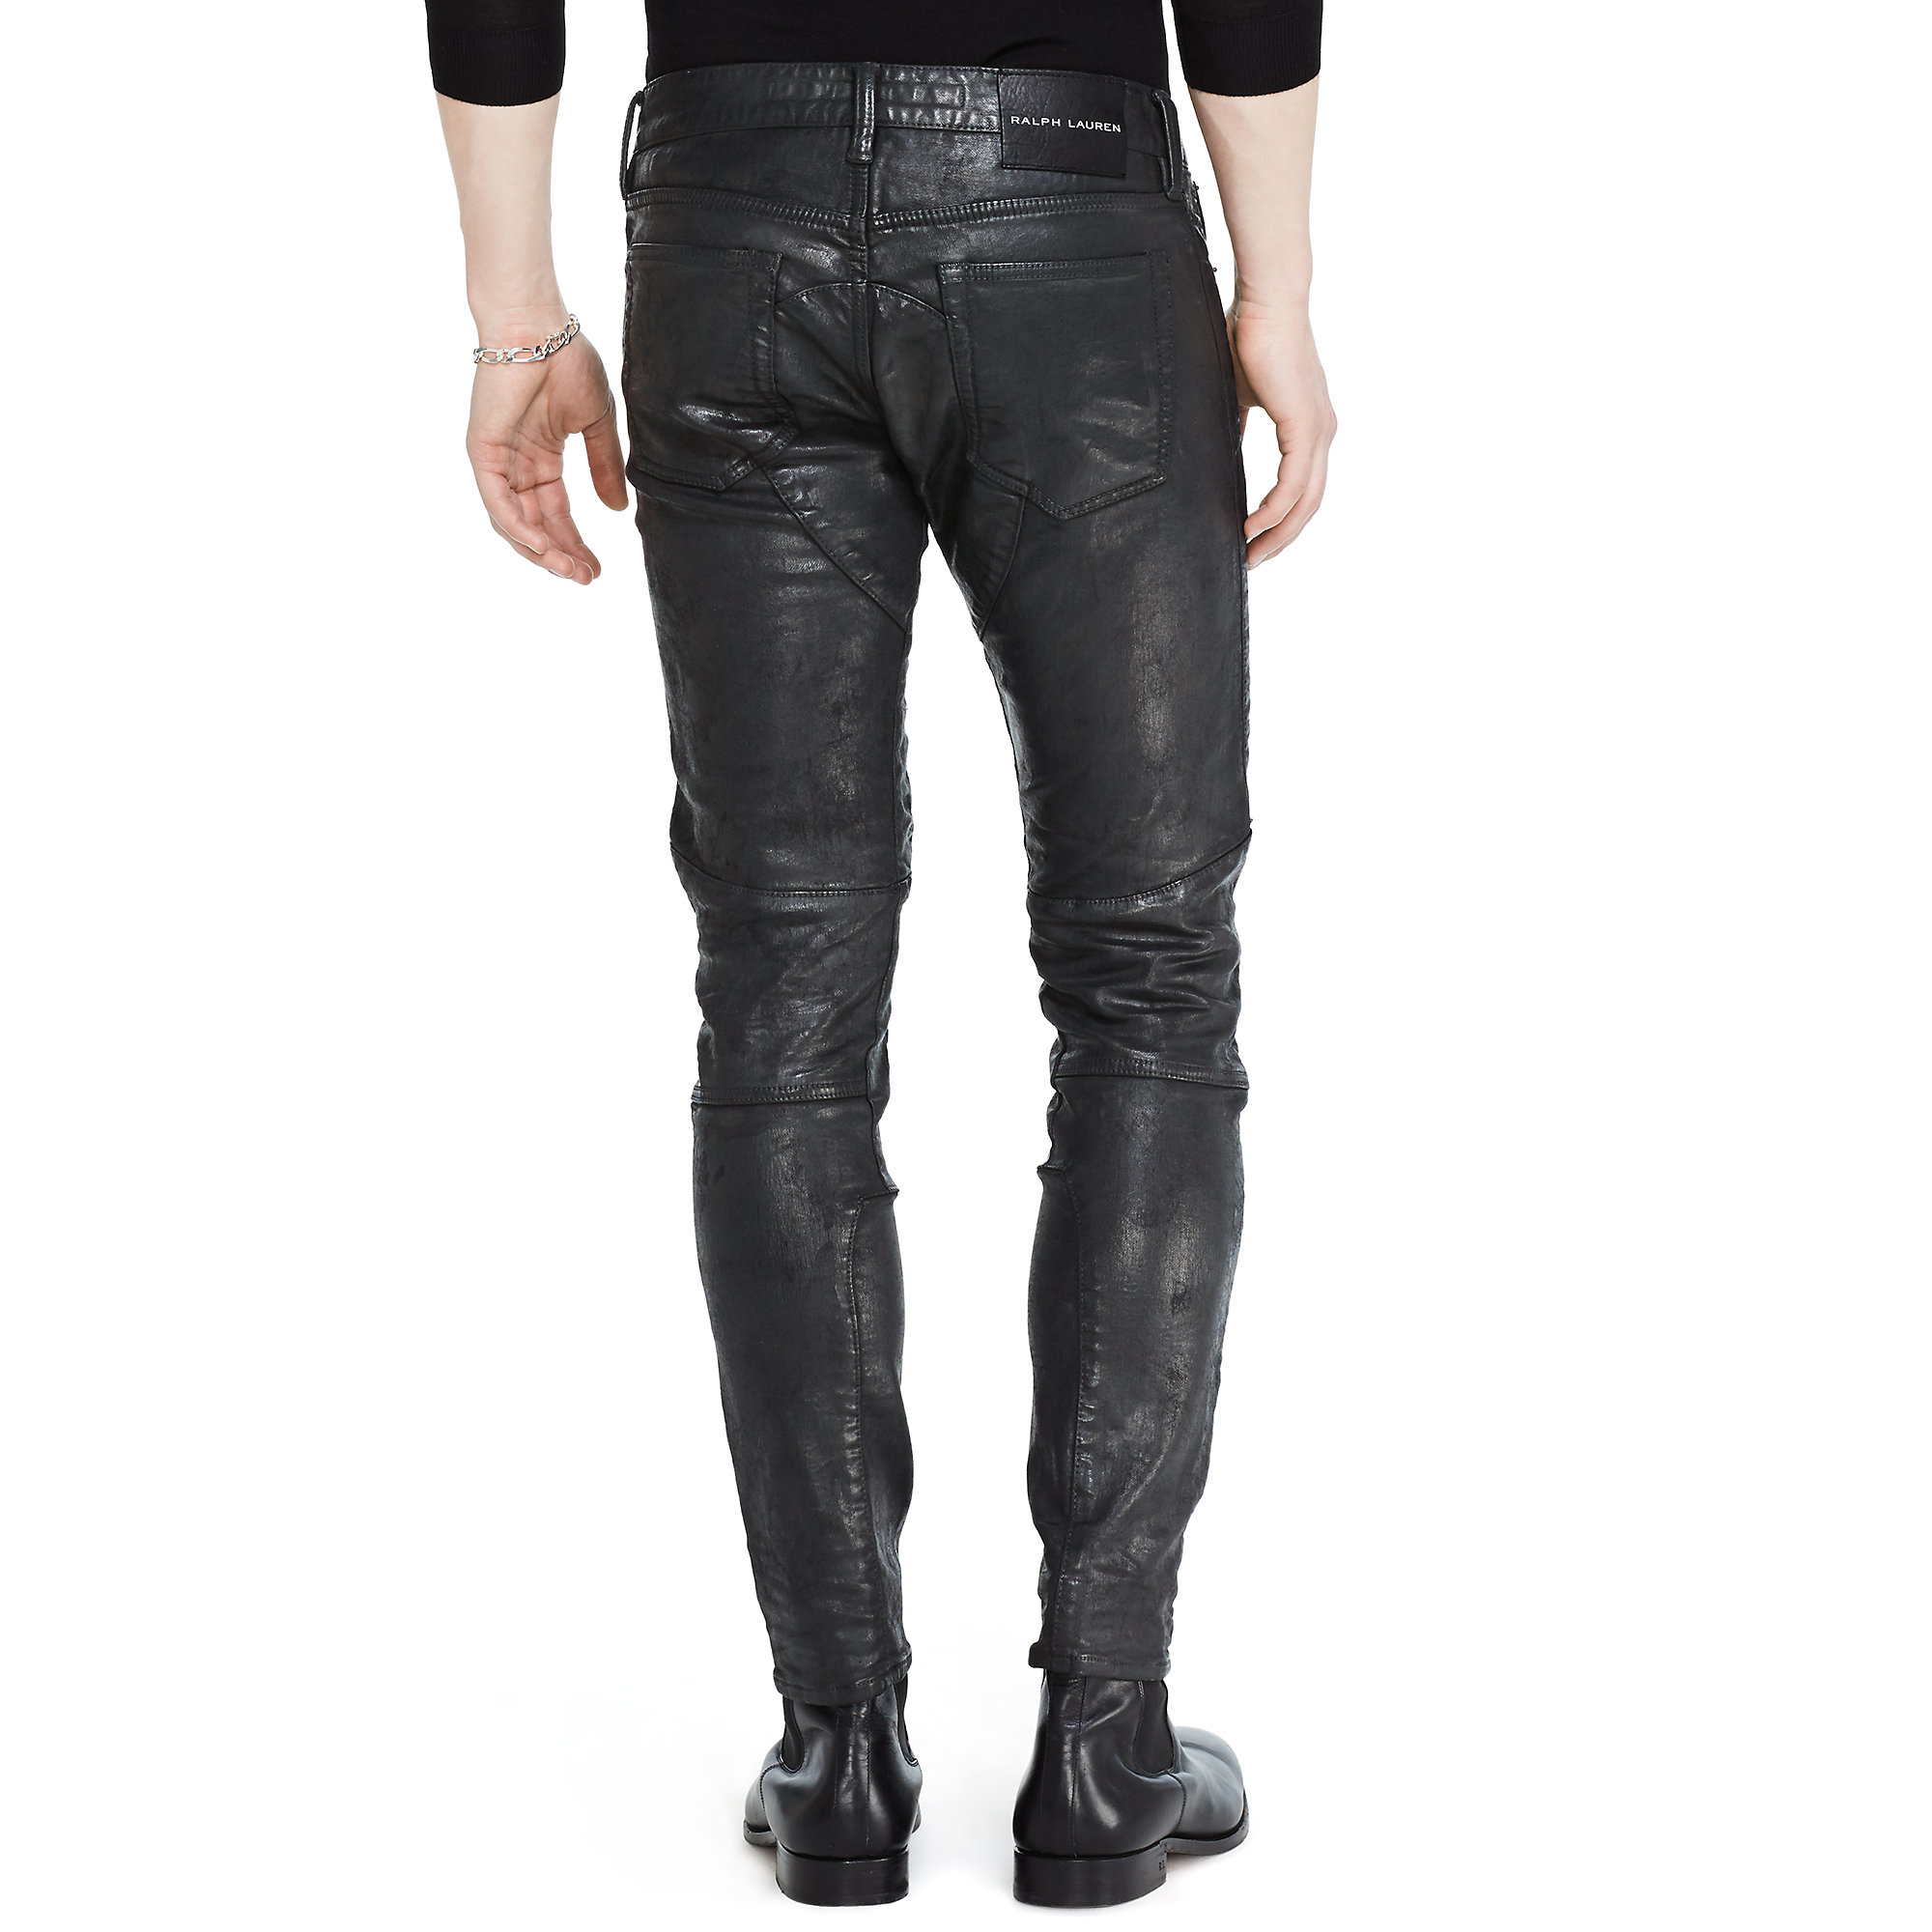 35 Ralph Lauren Black Label Biker Jeans - Label Design Ideas 2020